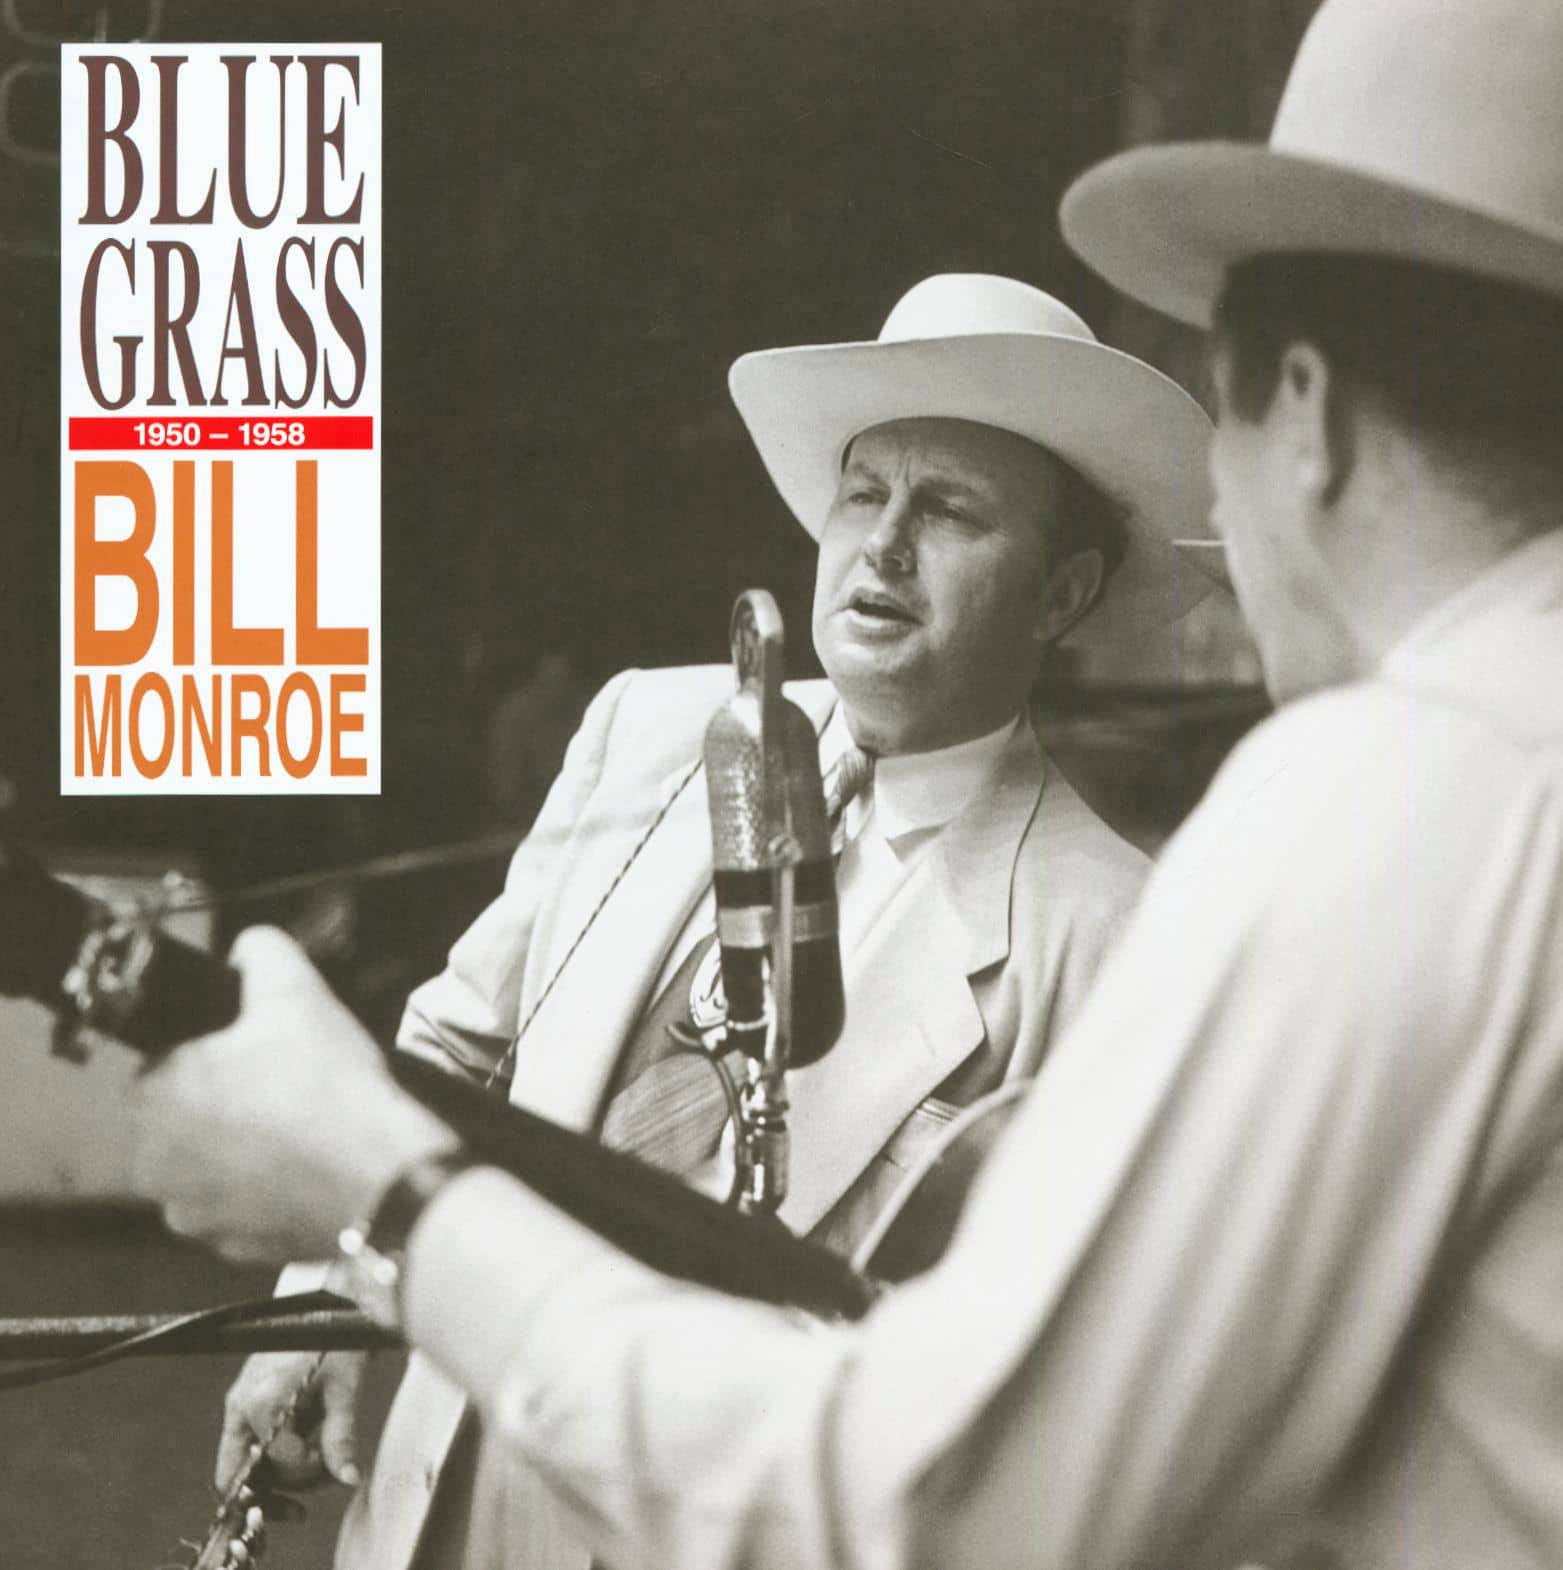 Bill Monroe - The Father of Bluegrass Music Album Cover Wallpaper